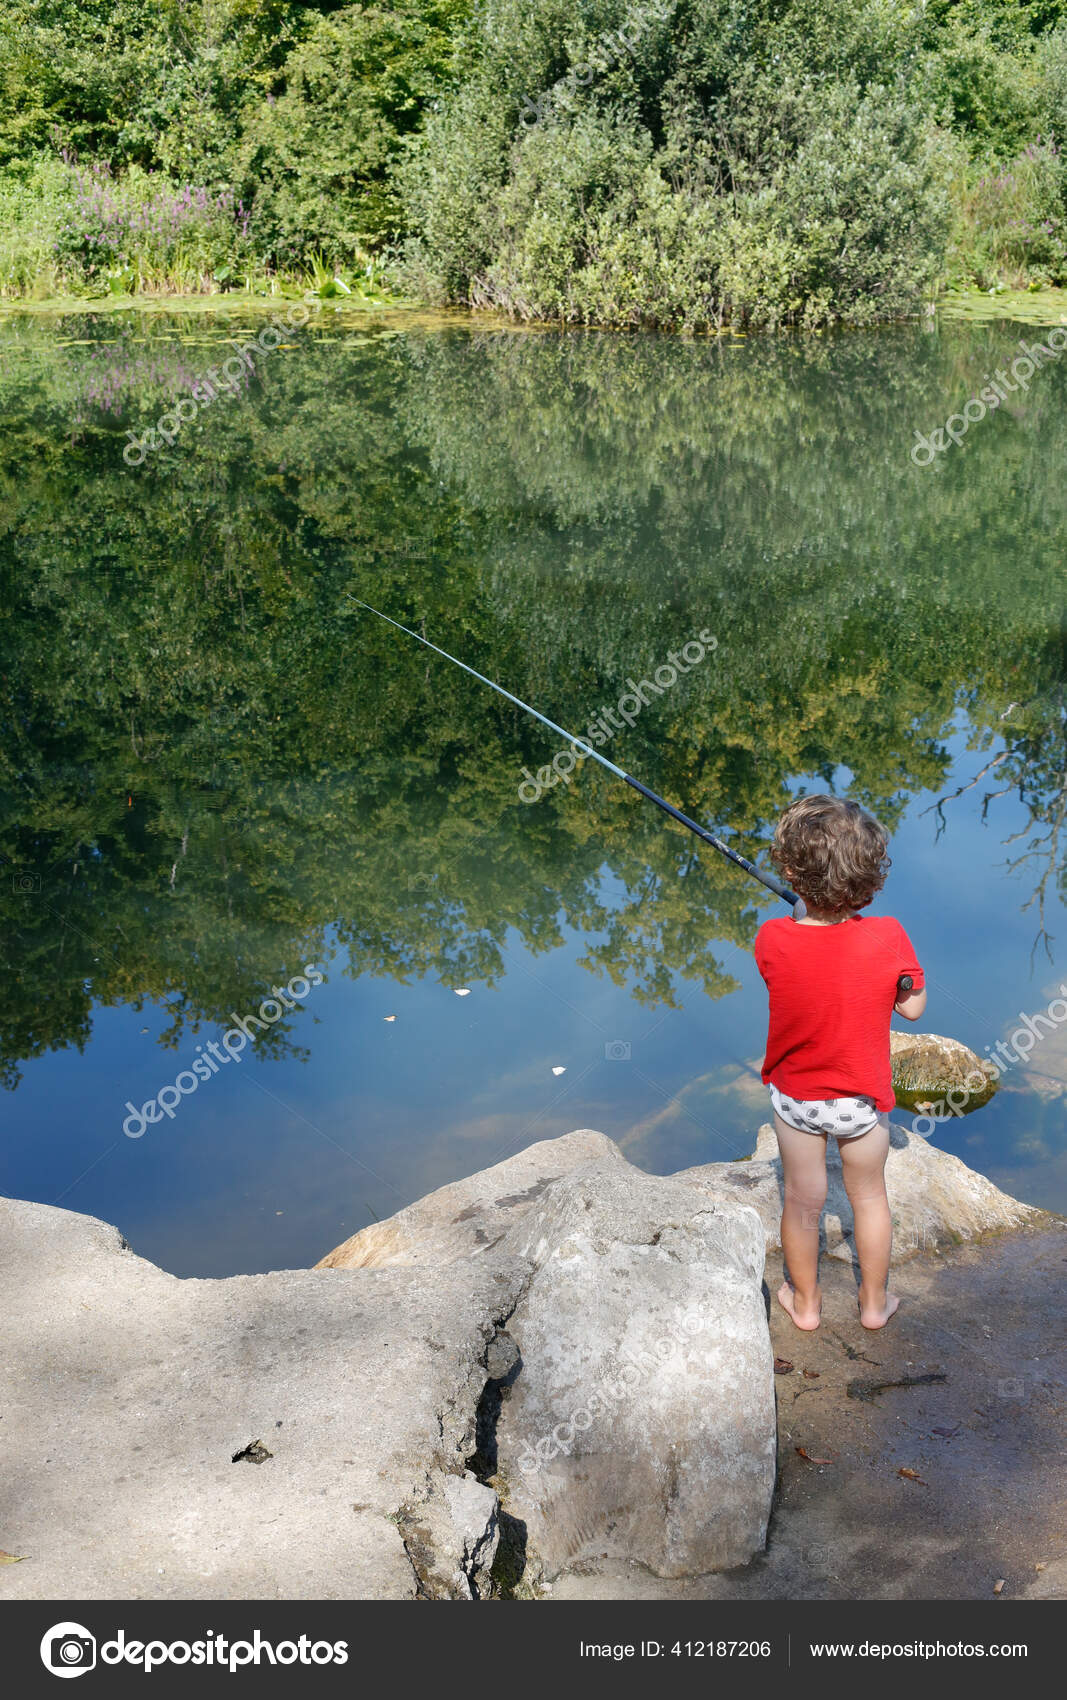 https://st4.depositphotos.com/15113232/41218/i/1600/depositphotos_412187206-stock-photo-young-boy-fishing-riverbank-alone.jpg